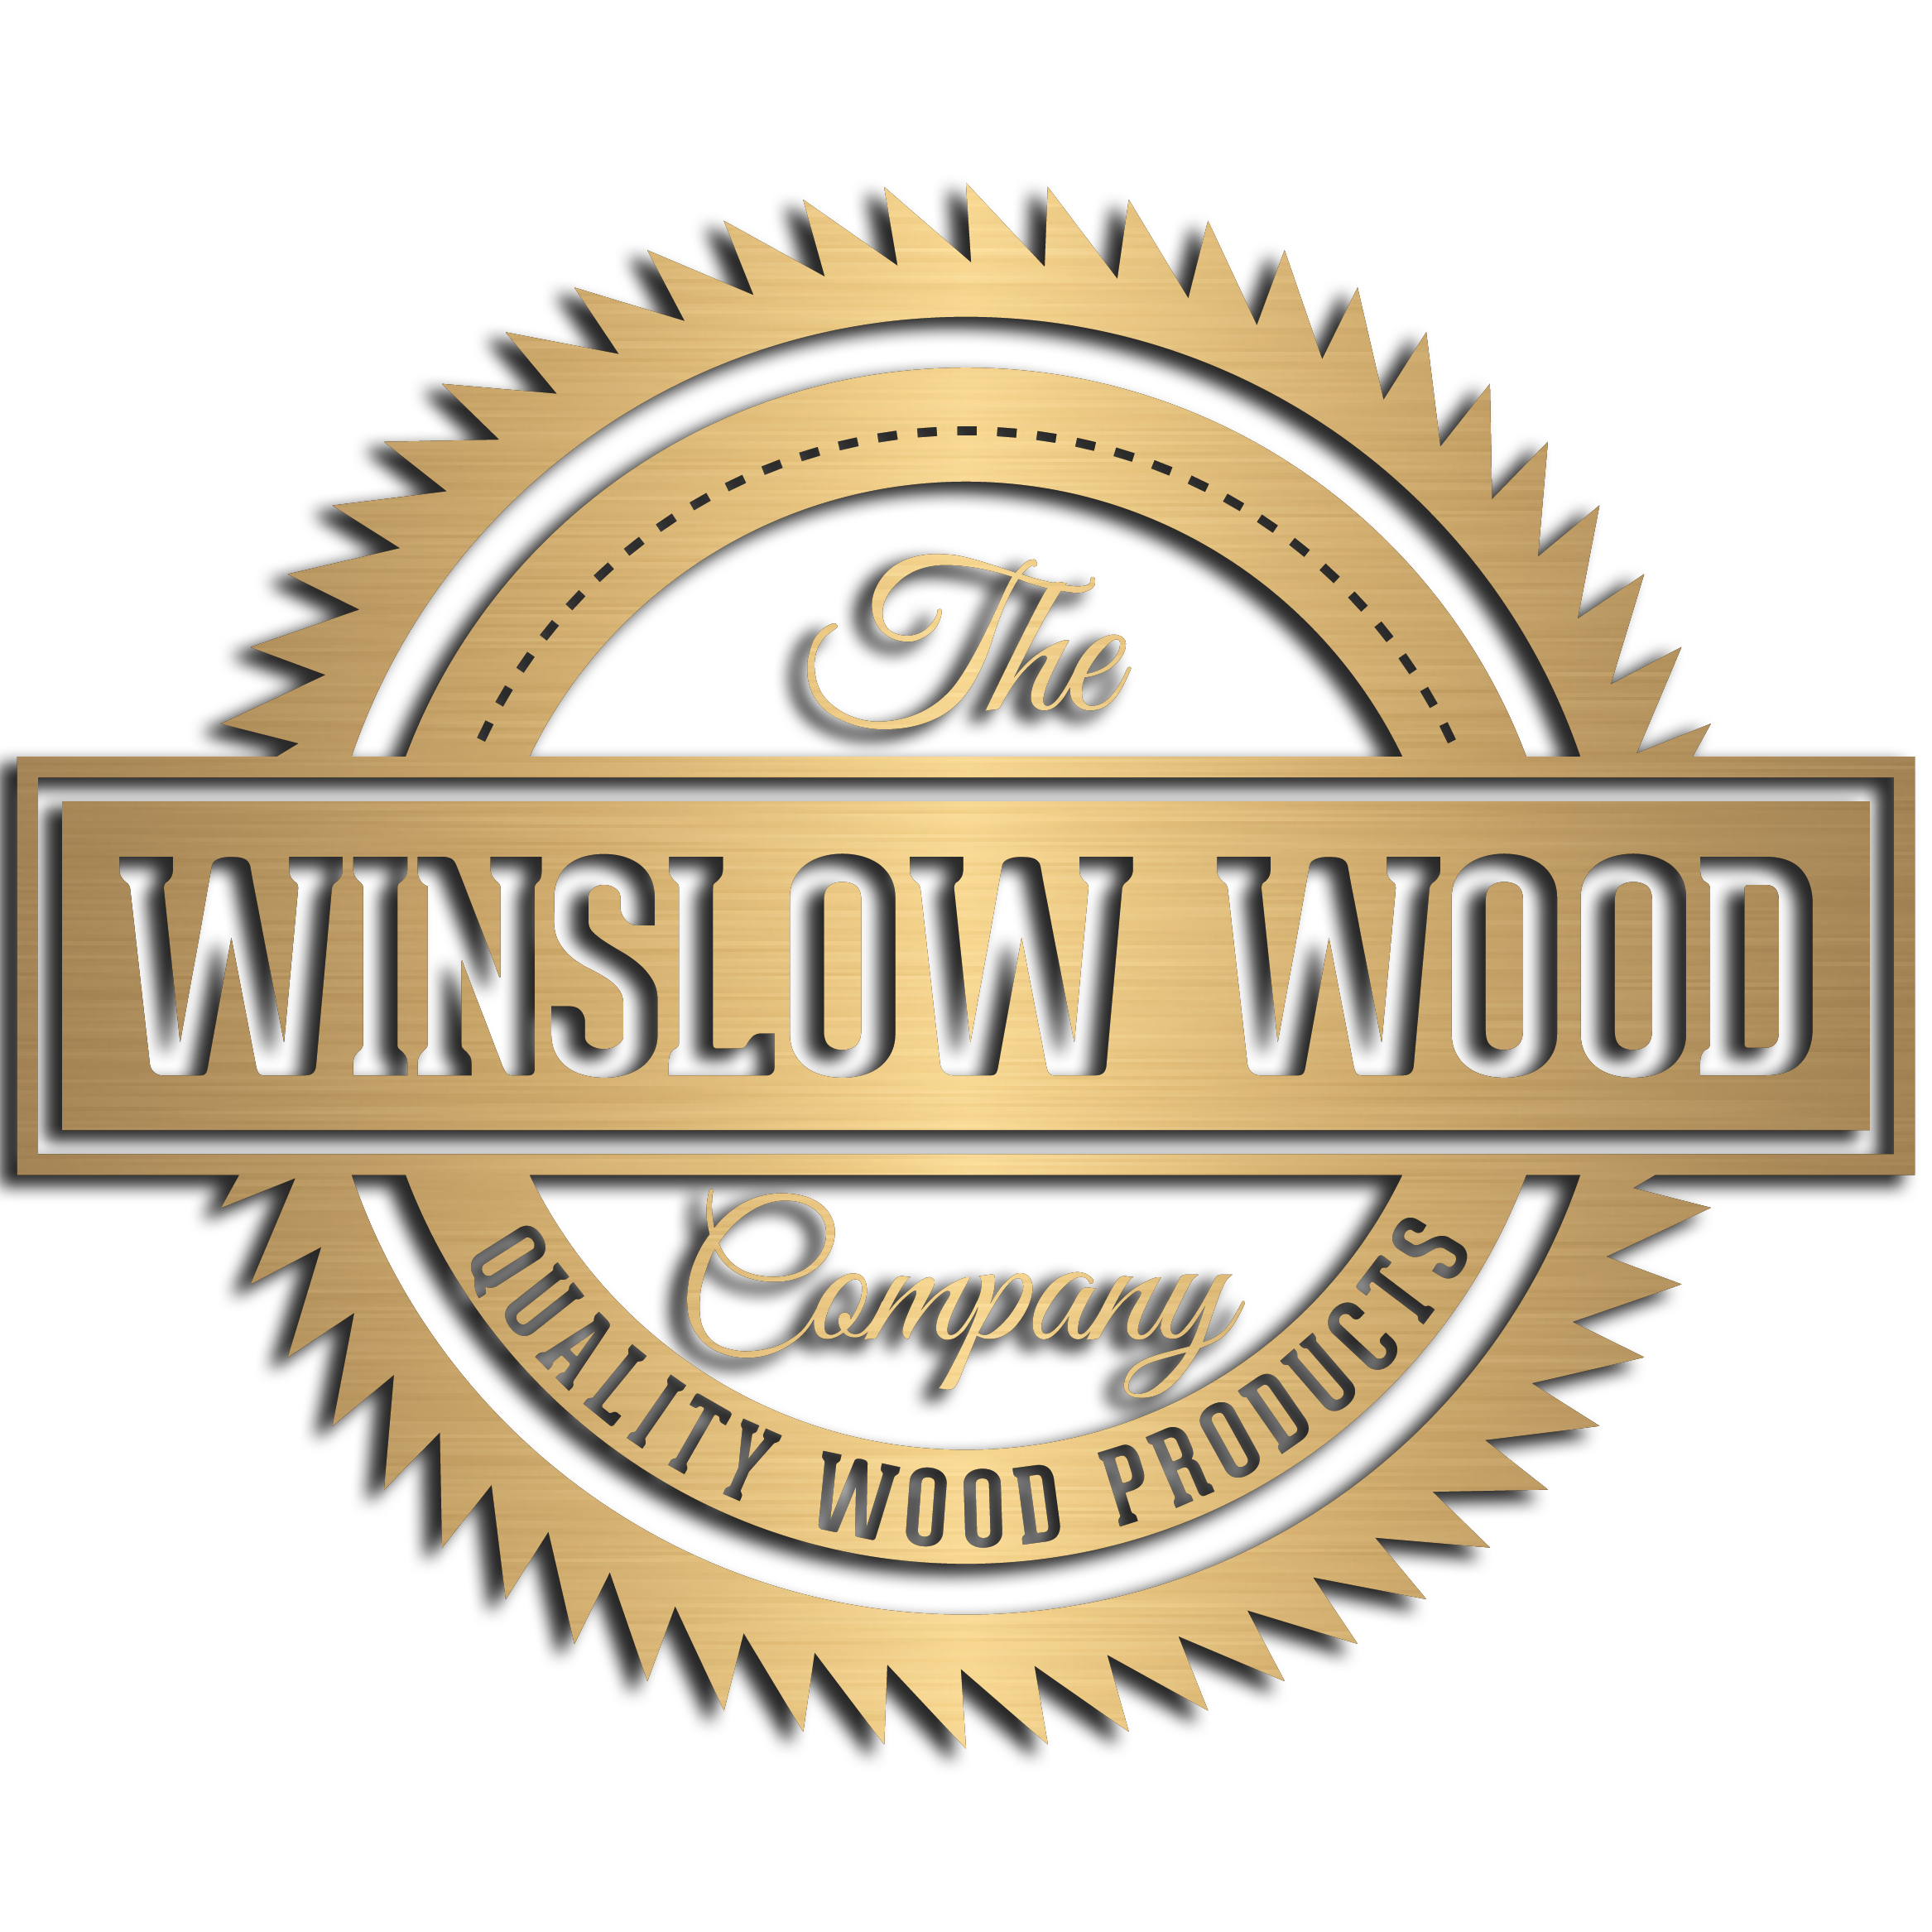 The Winslow Wood Company